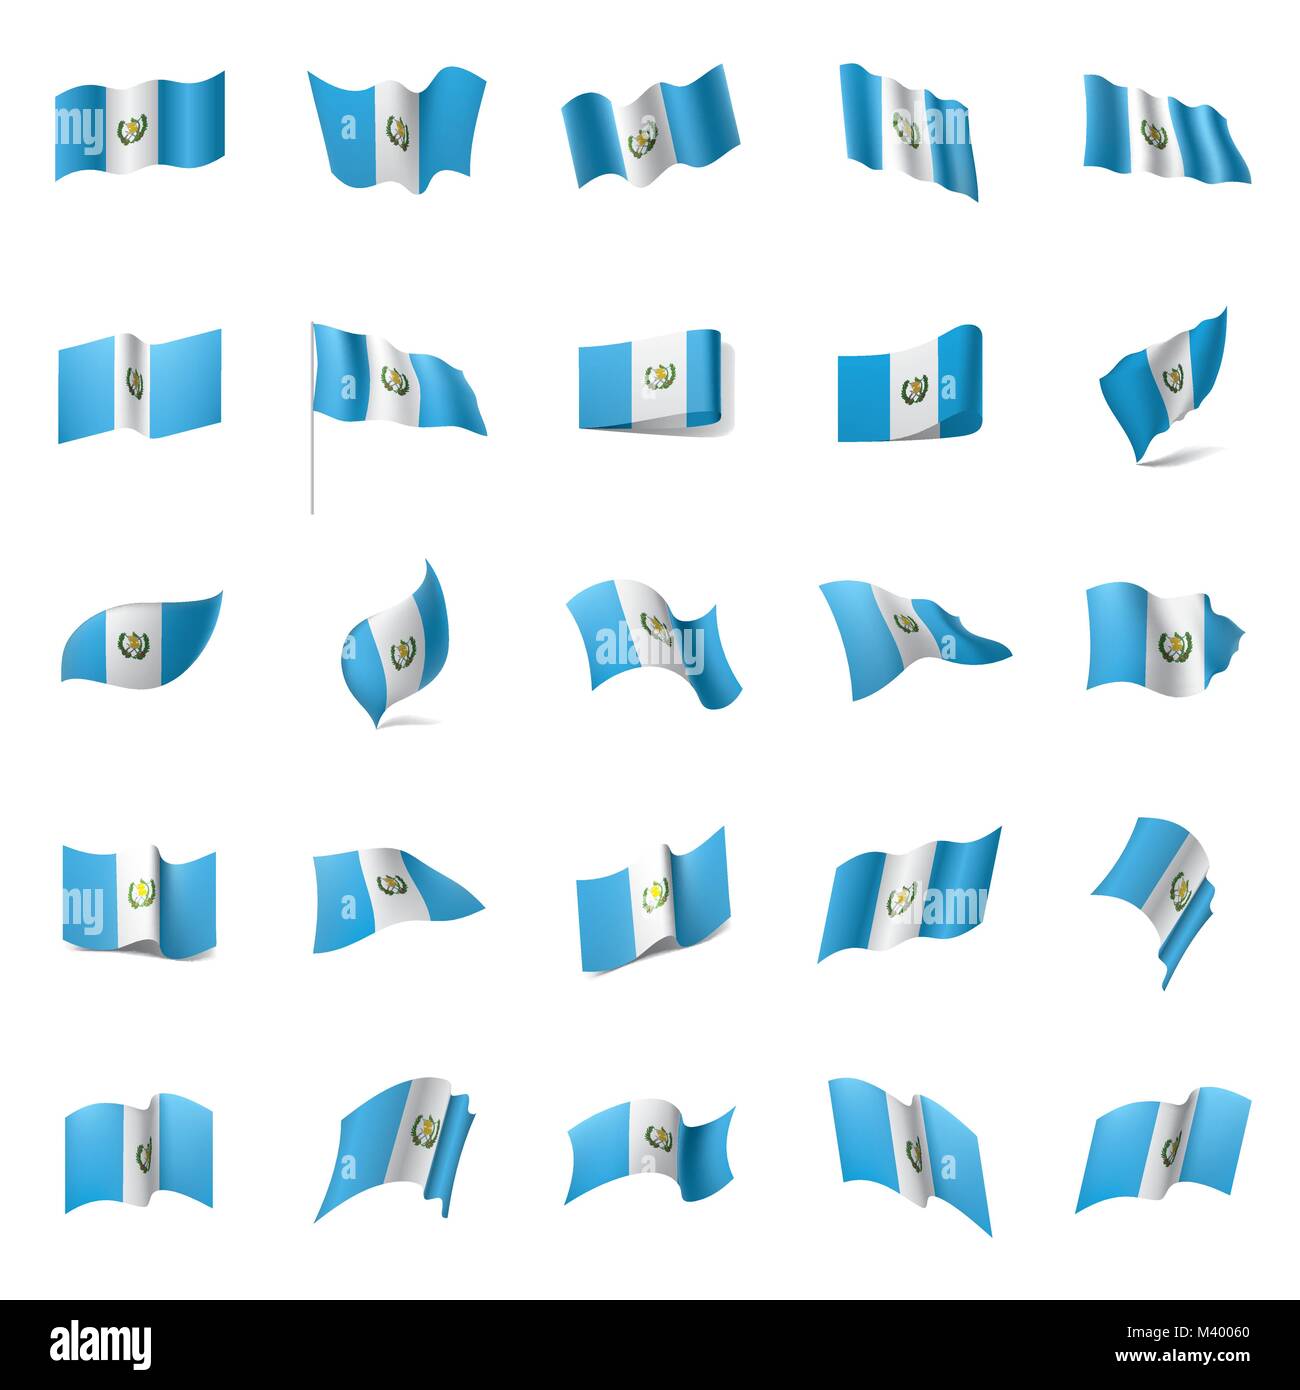 Guatemala flag, vector illustration Stock Vector